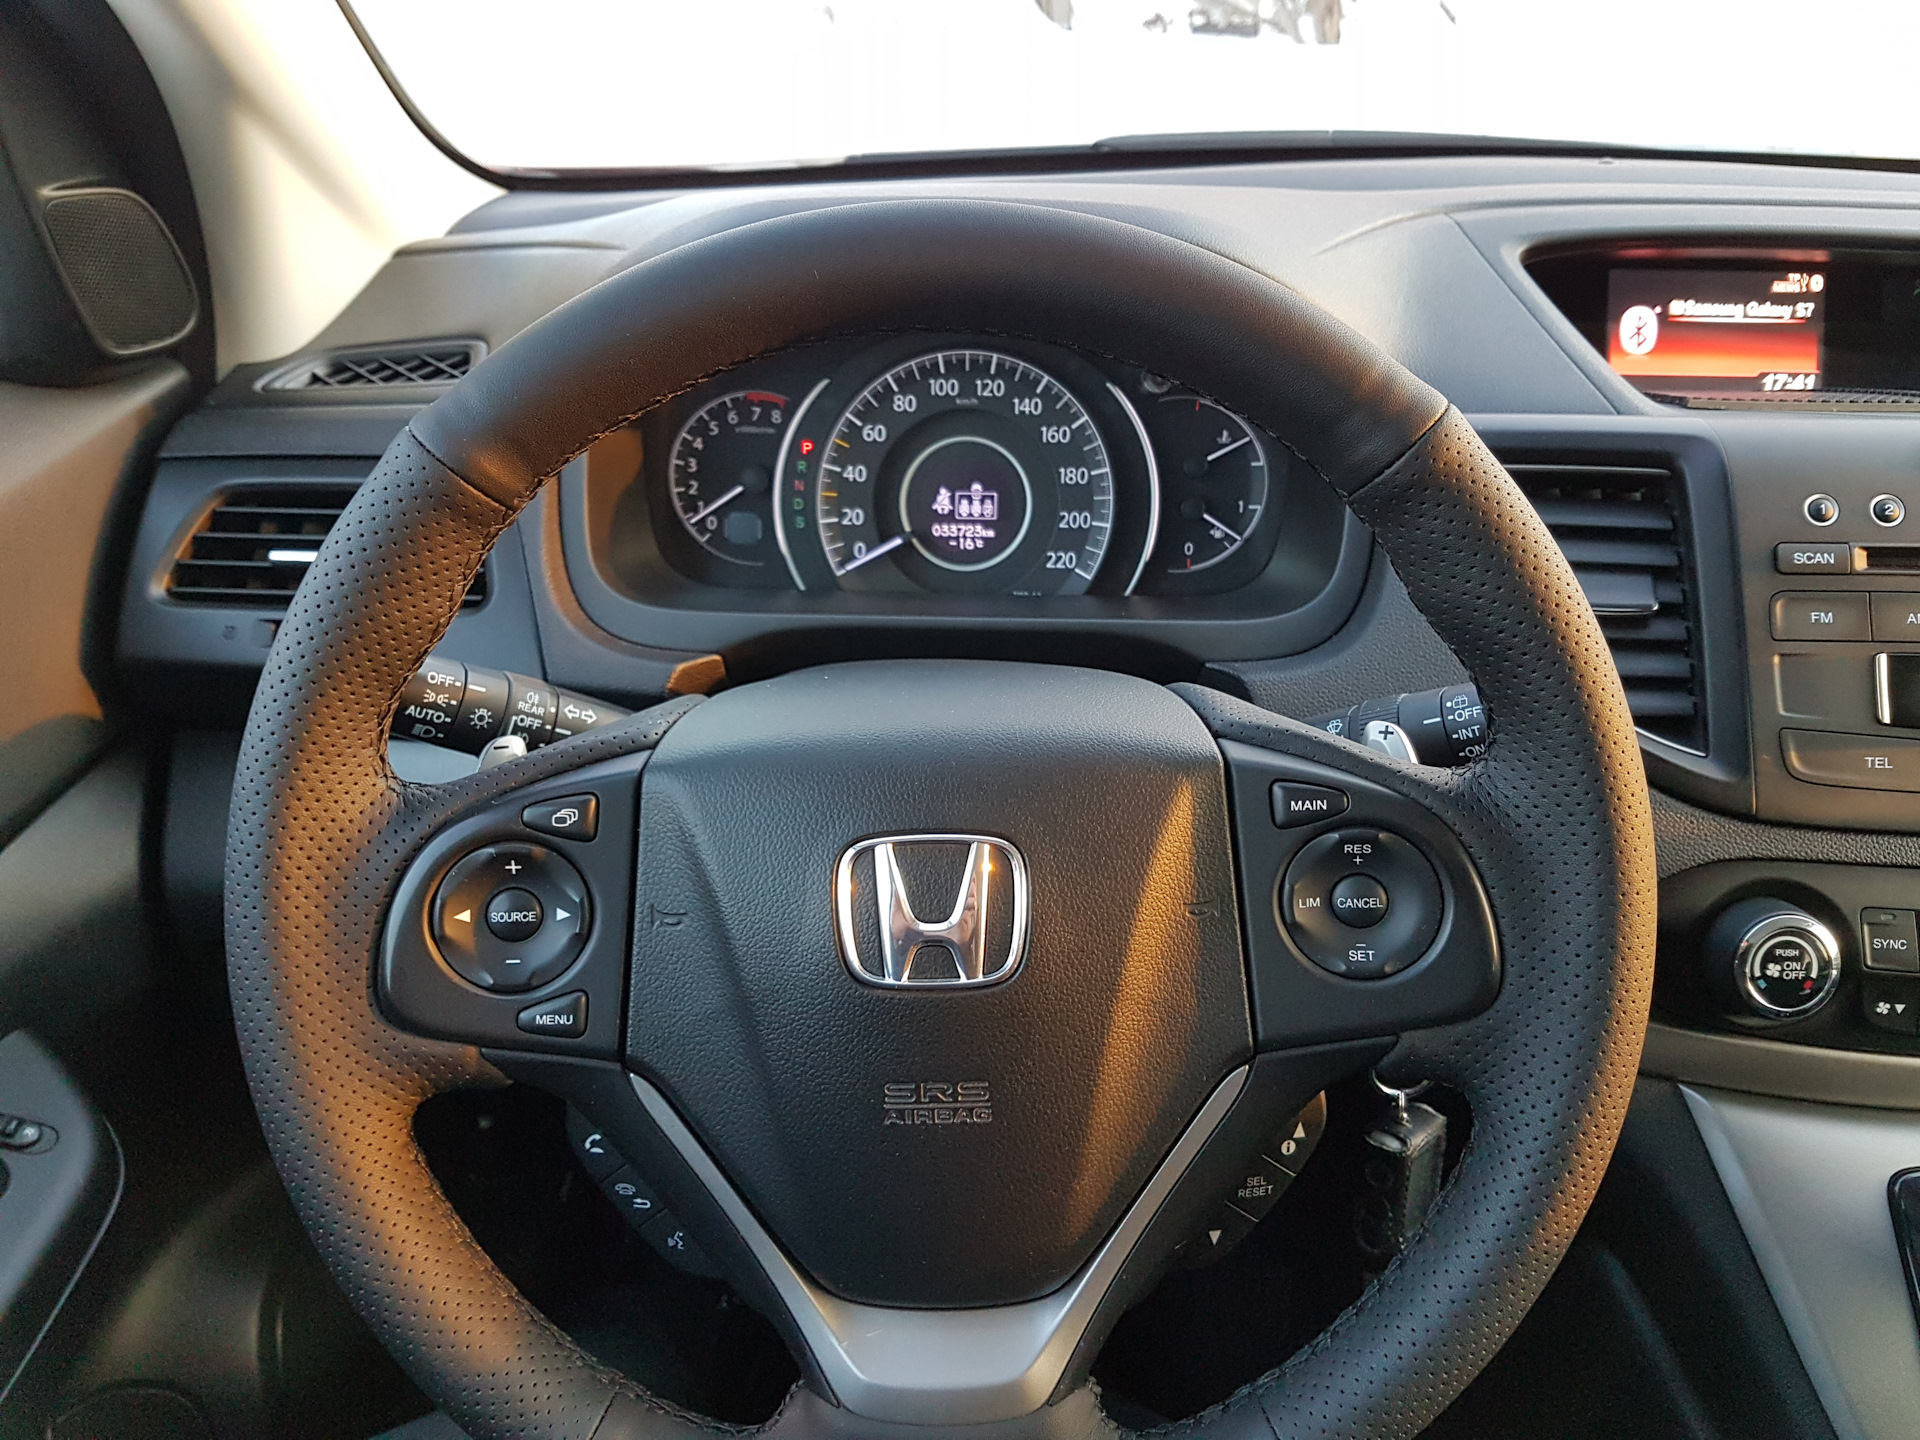 Honda crv руль. Руль Honda CRV 2. Хонда CRV 2013 руль. Honda CRV 3 руль. Руль Honda CR-V 4.